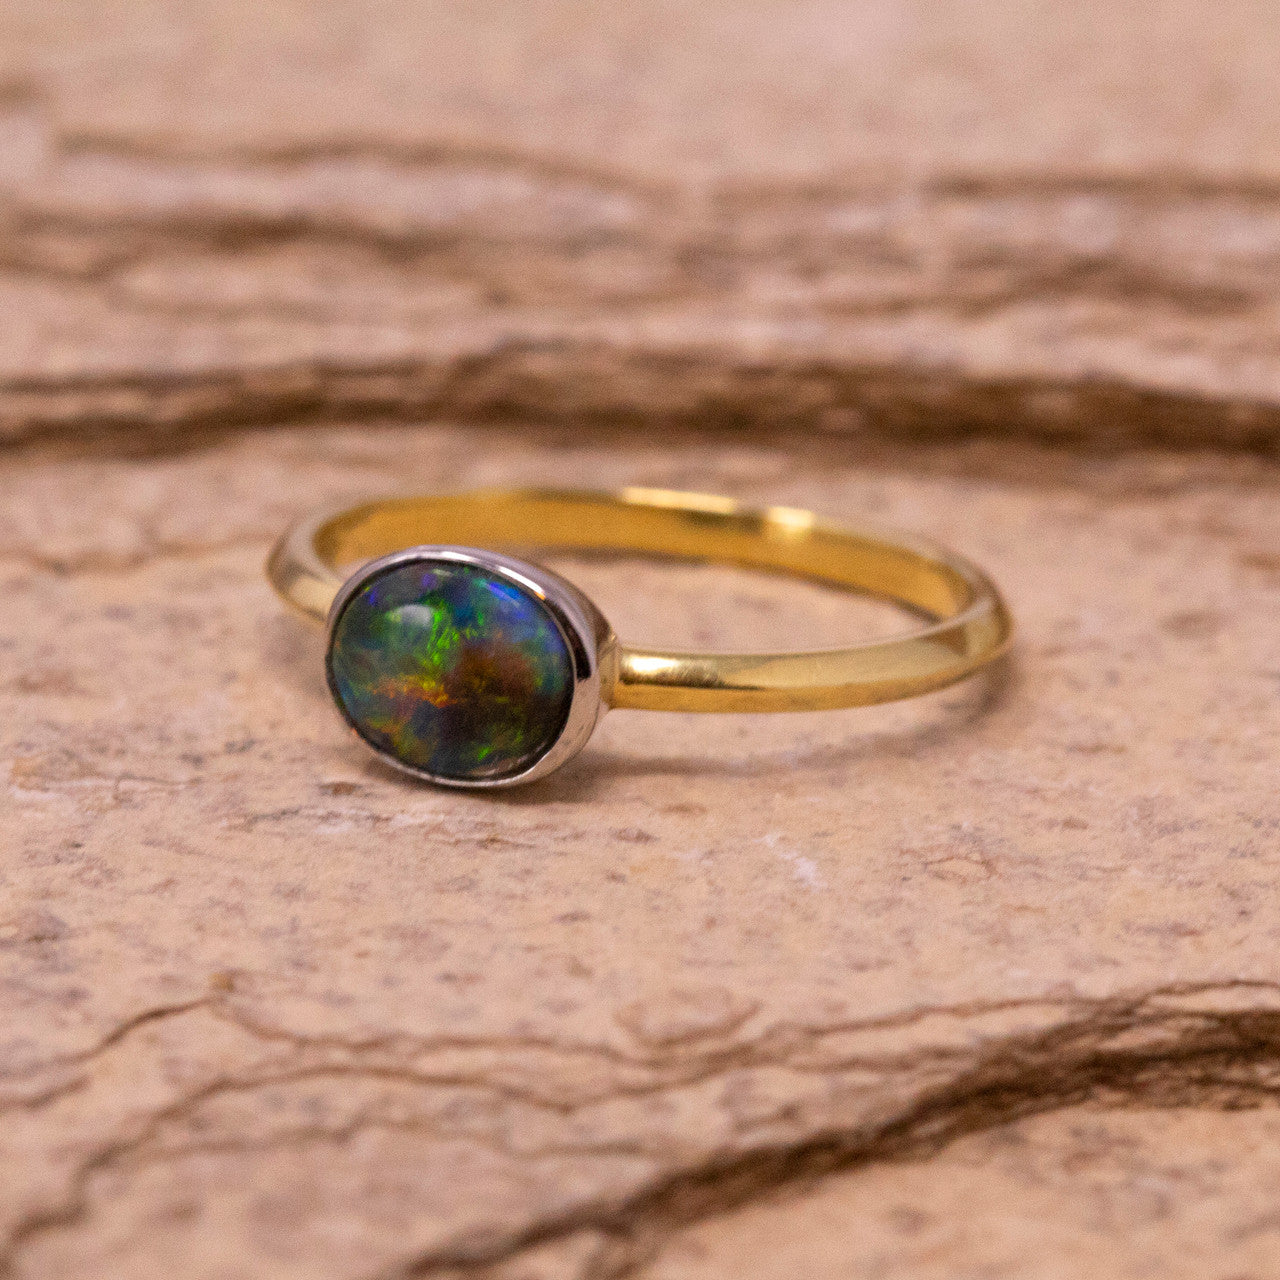 Australian Black Opal Paloma 18kt Gold Ring made in USA by Cynthia Scott Jewelry